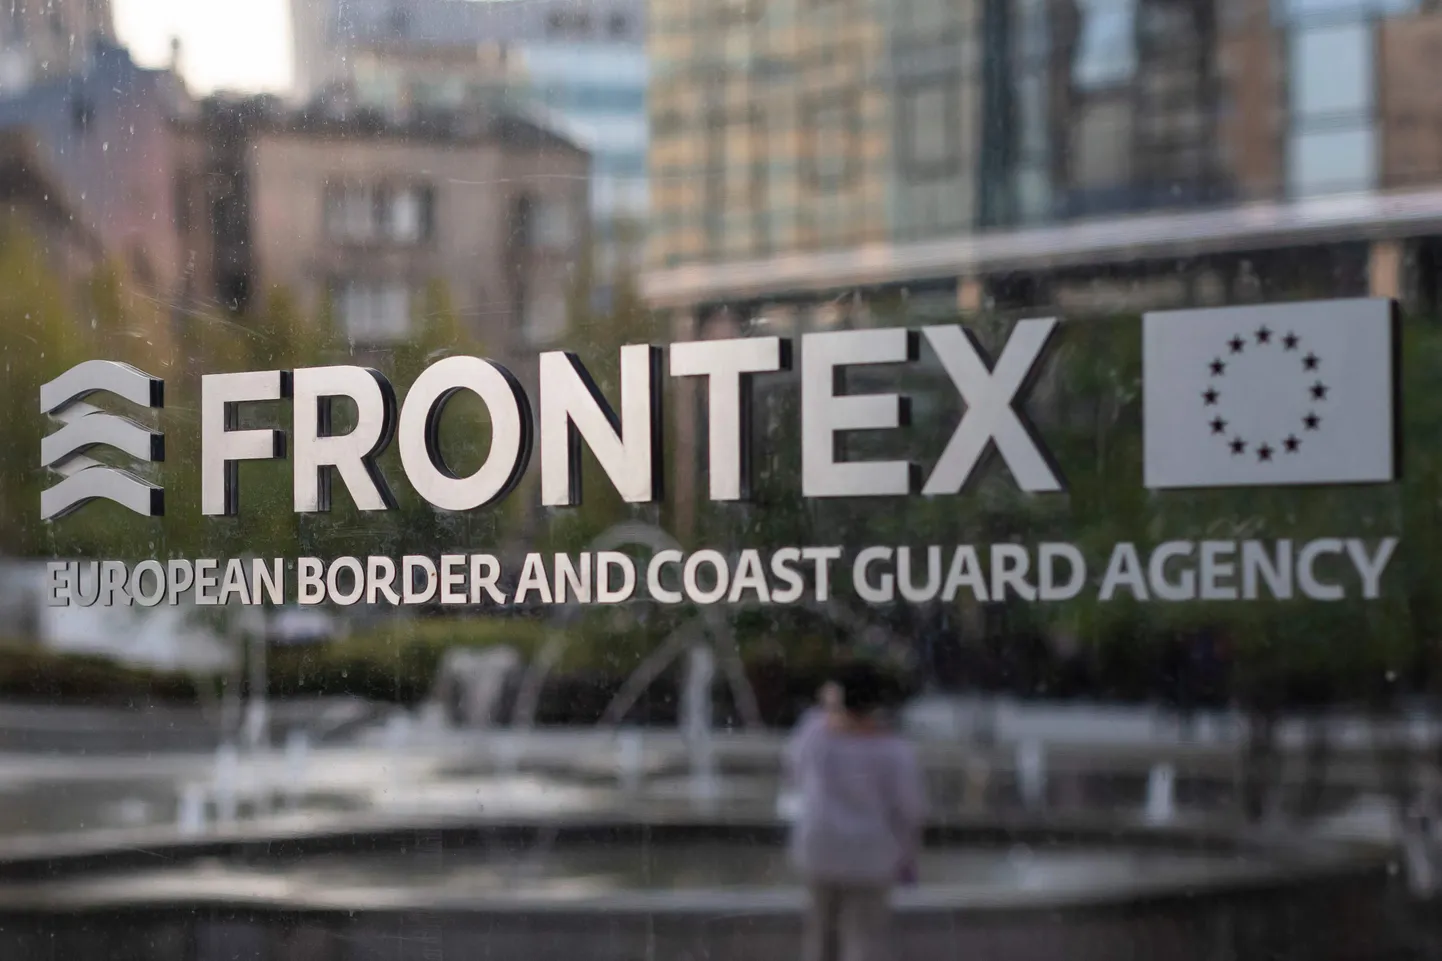 Euroopa Liidu piirivalveameti Frontex logo.